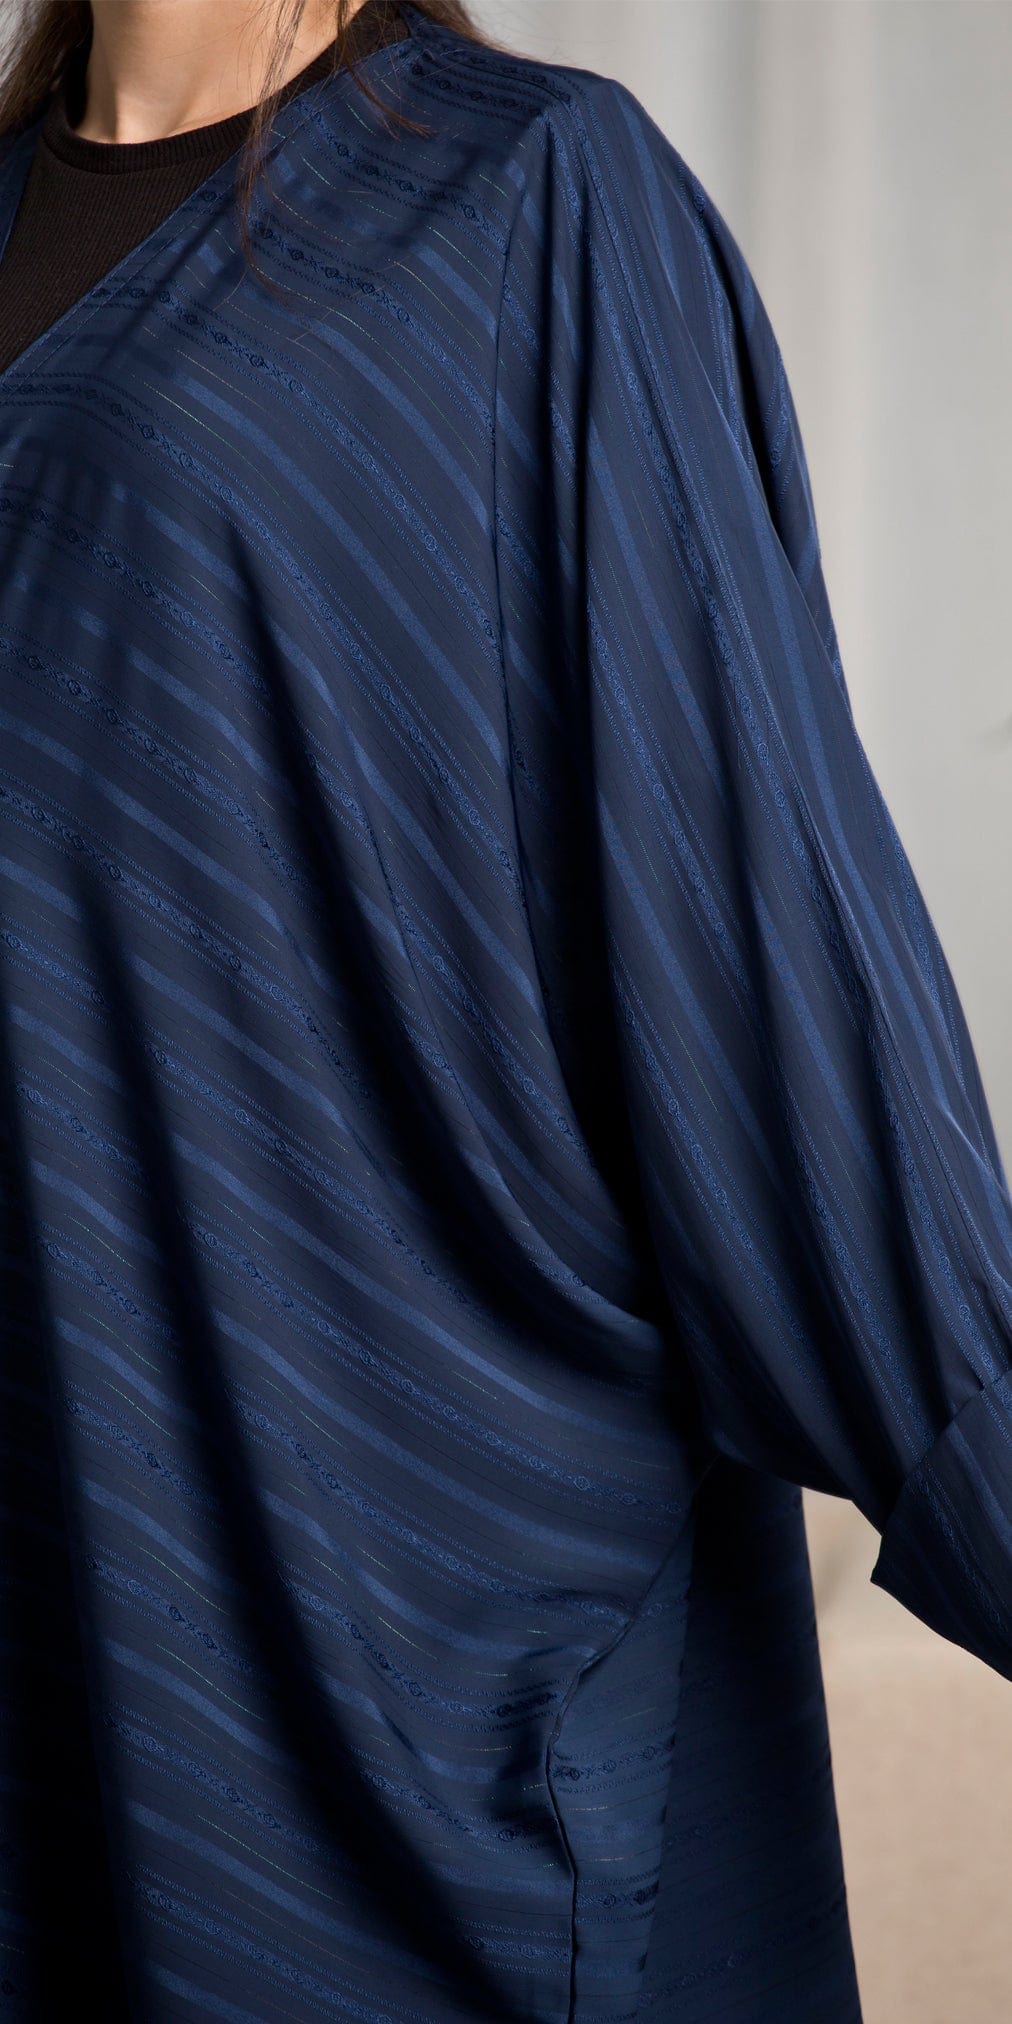 CL-0200 Abaya, wide model, navy blue striped fabric